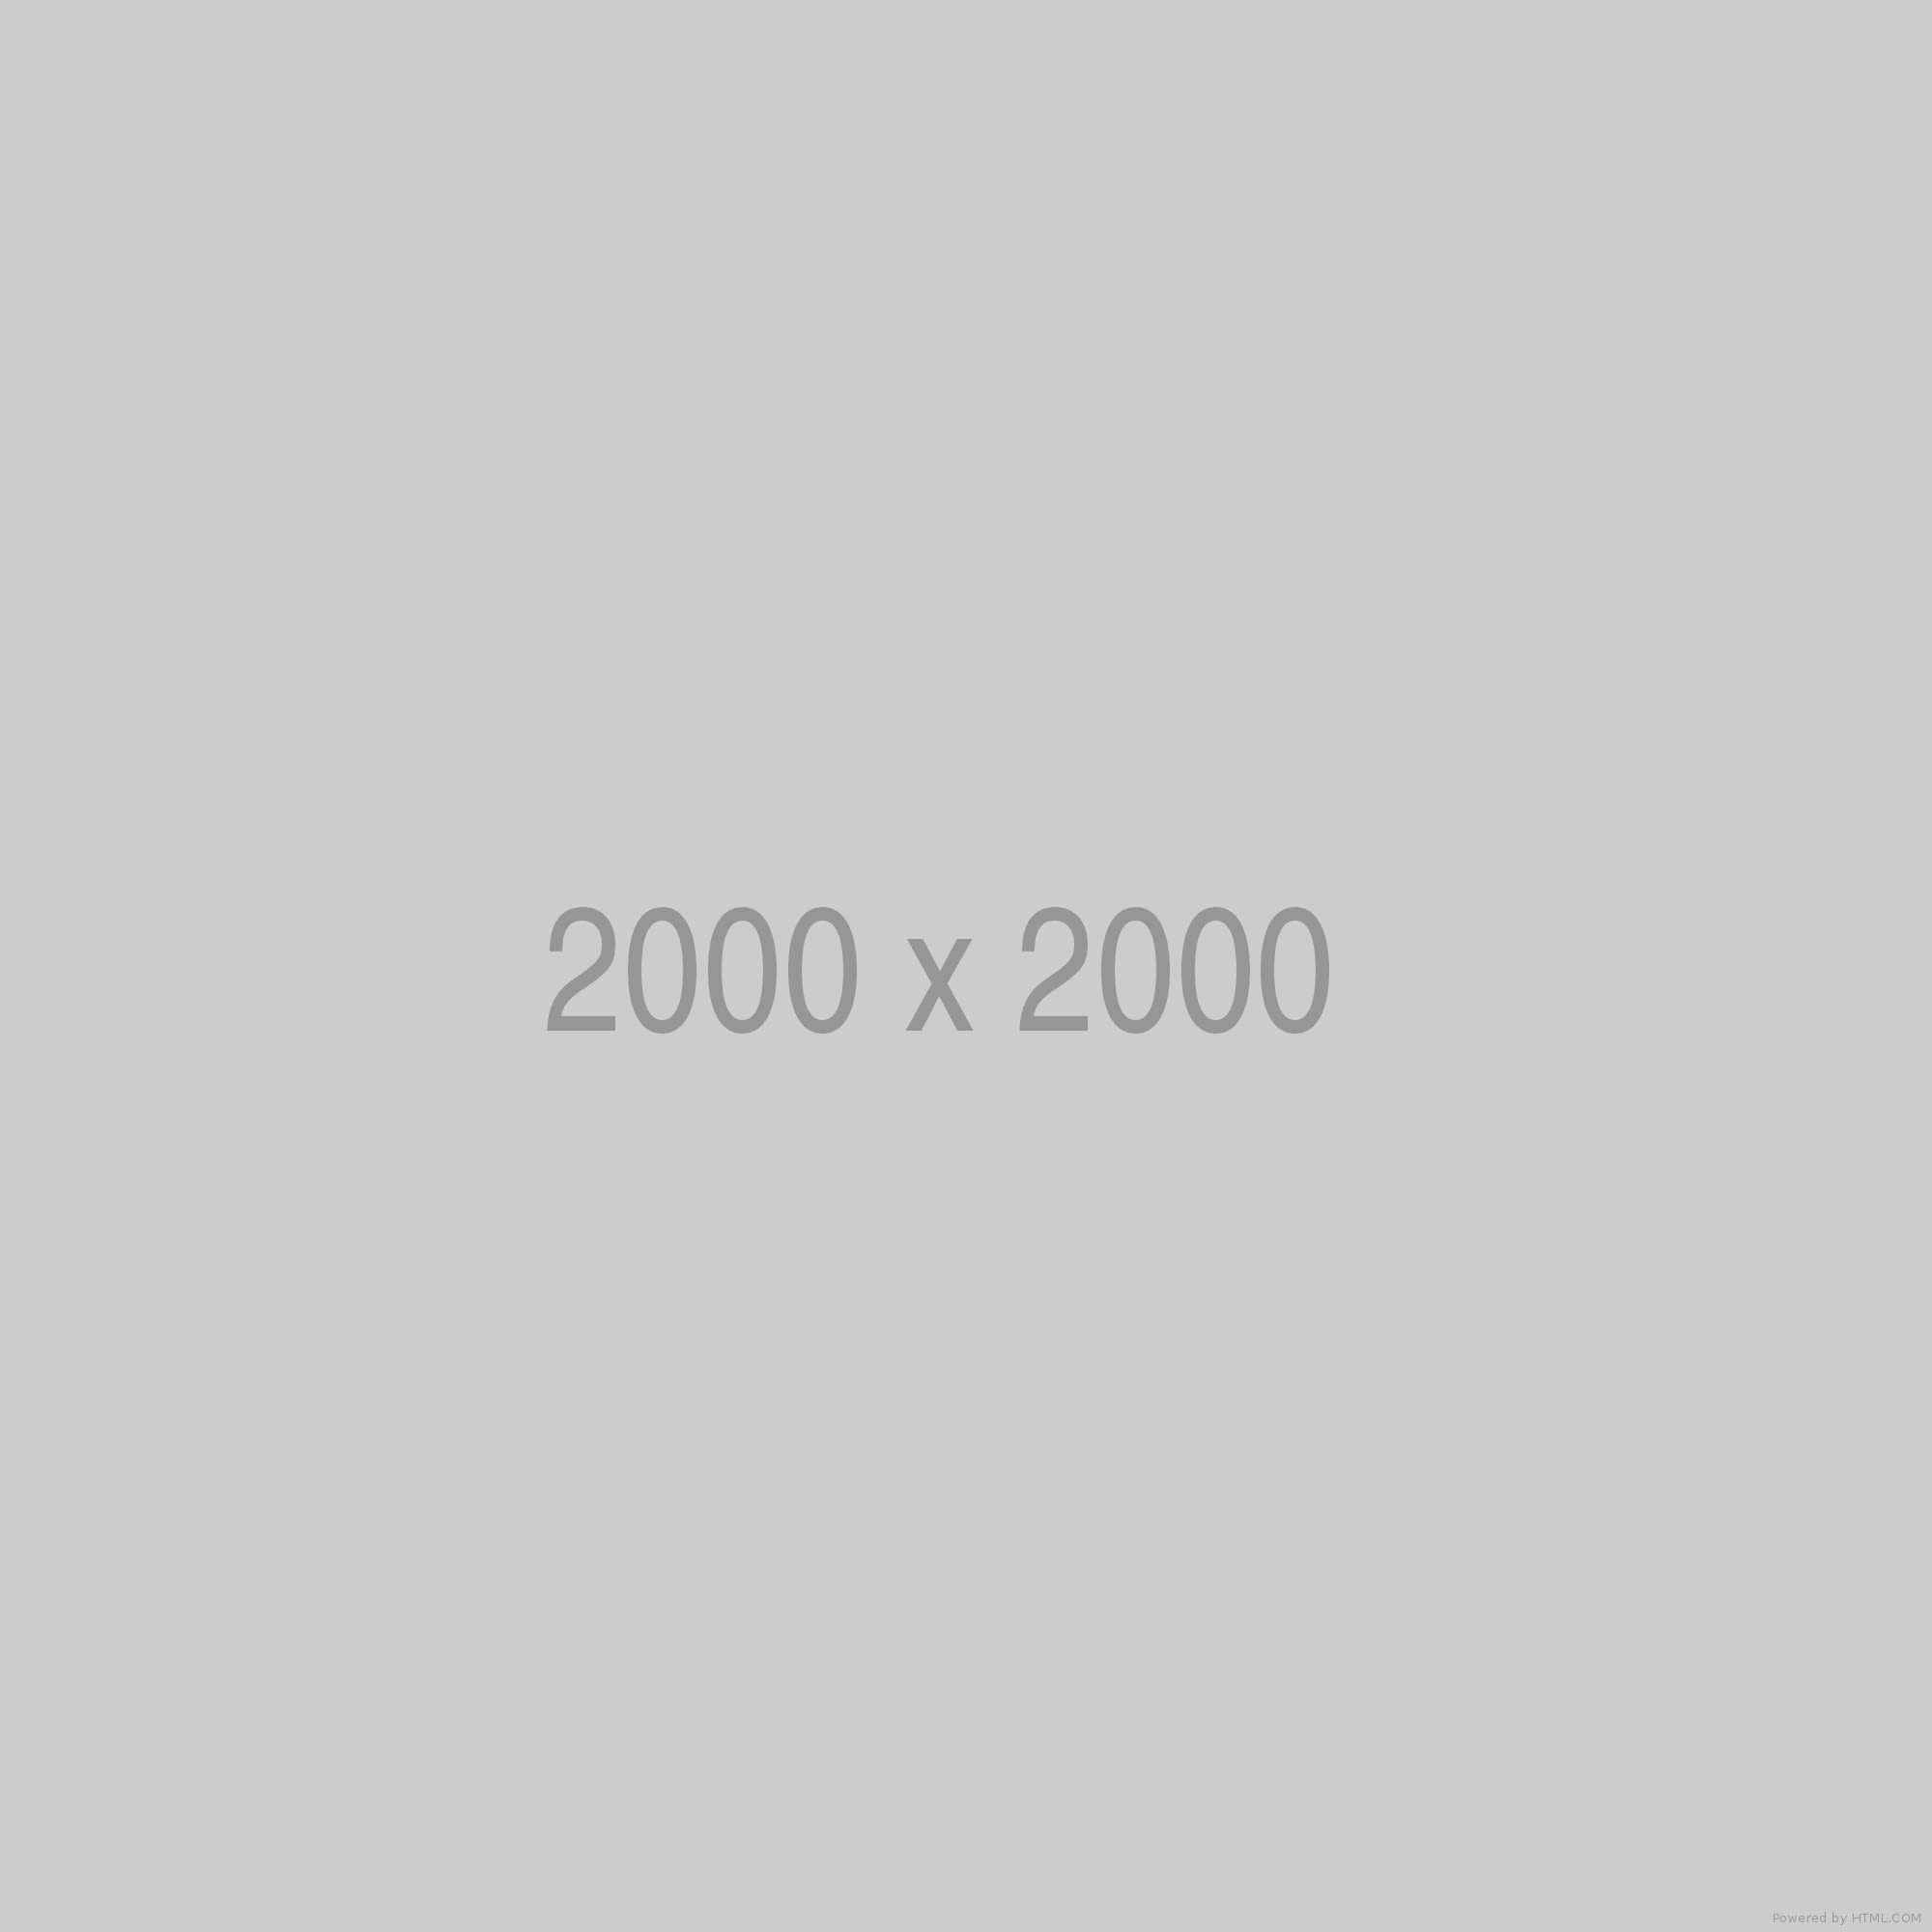 200 1 17 2. 200 На 200. 200 На 200 пикселей. Изображение 200x200. 200x200 картинки.